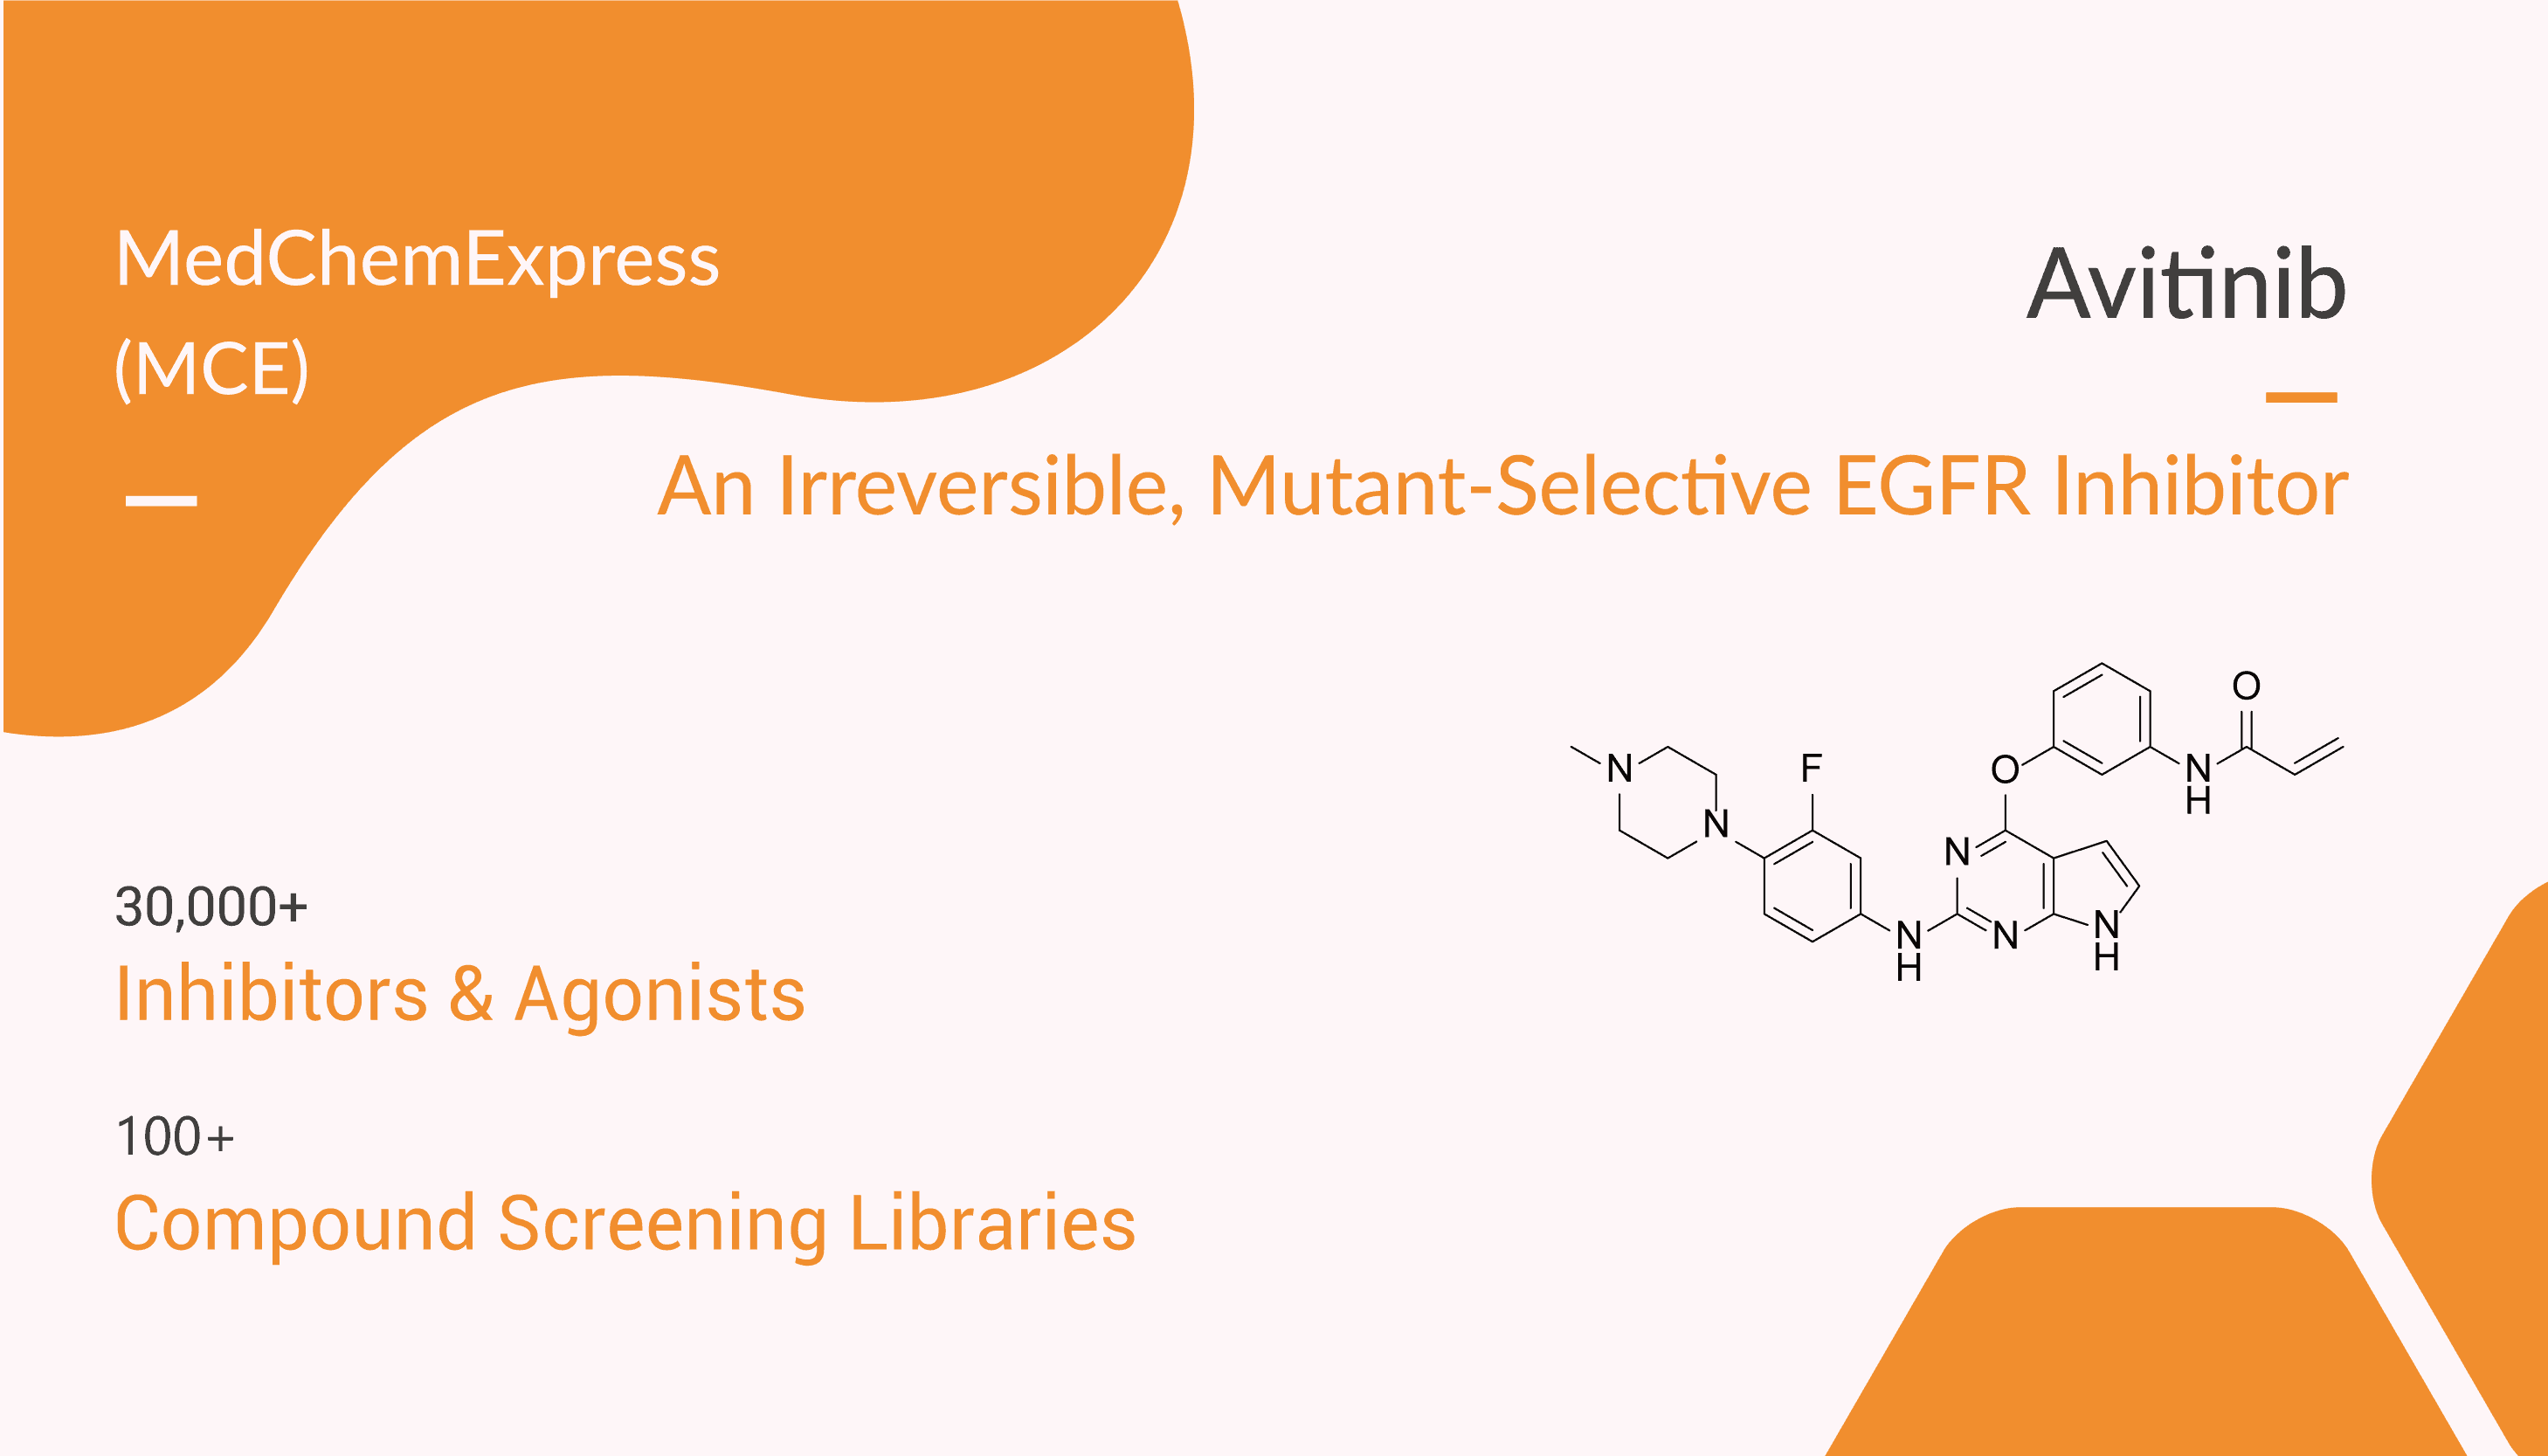 Avitinib is an Irreversible, Mutant-Selective EGFR Inhibitor